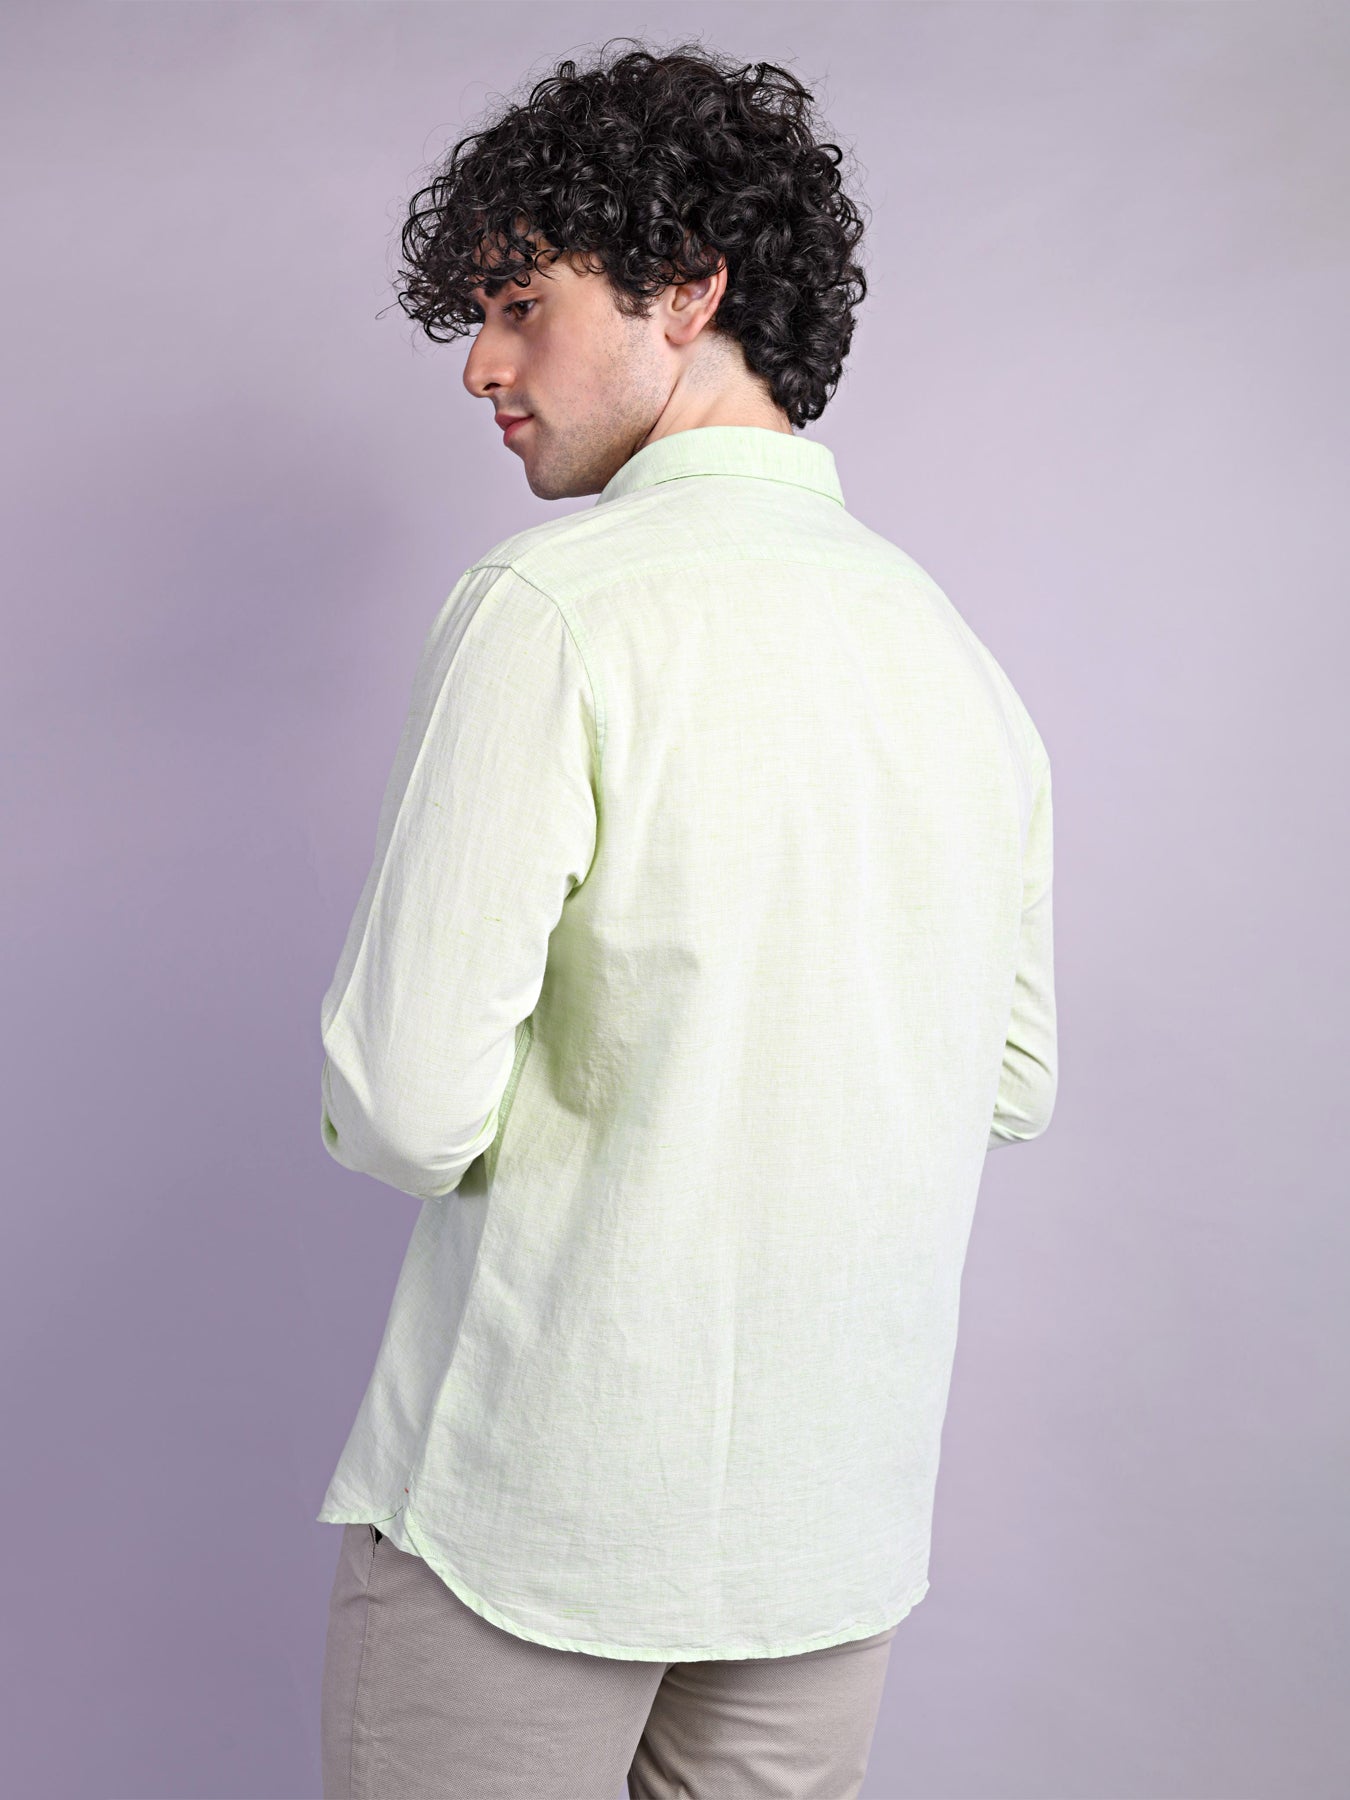 Cotton Linen Green Plain Slim Fit Full Sleeve Casual Shirt